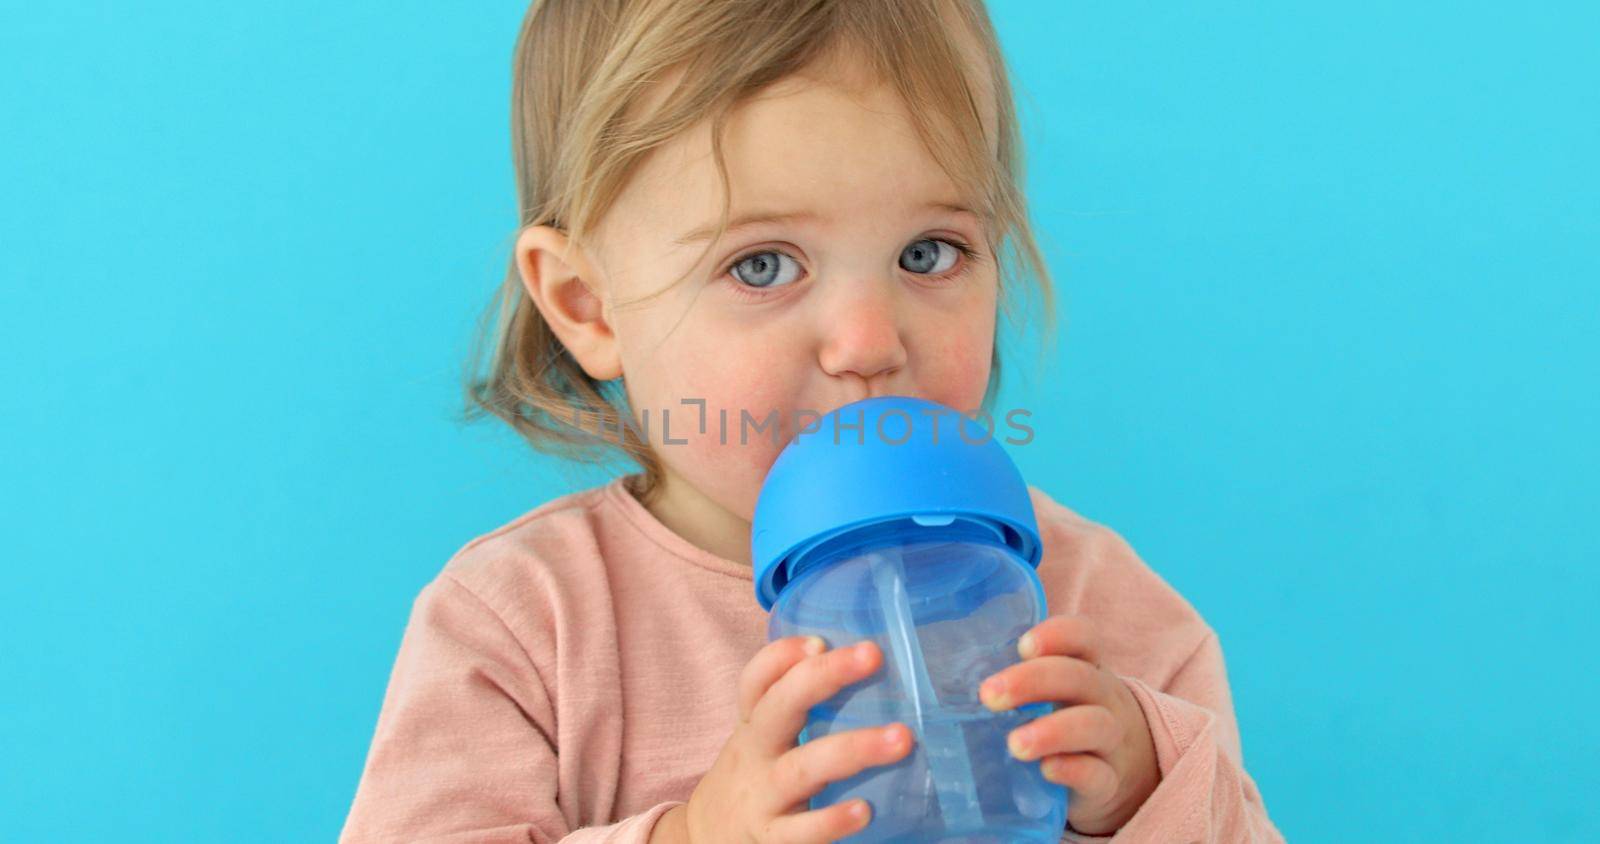 Child drinks water from a bottle by Demkat